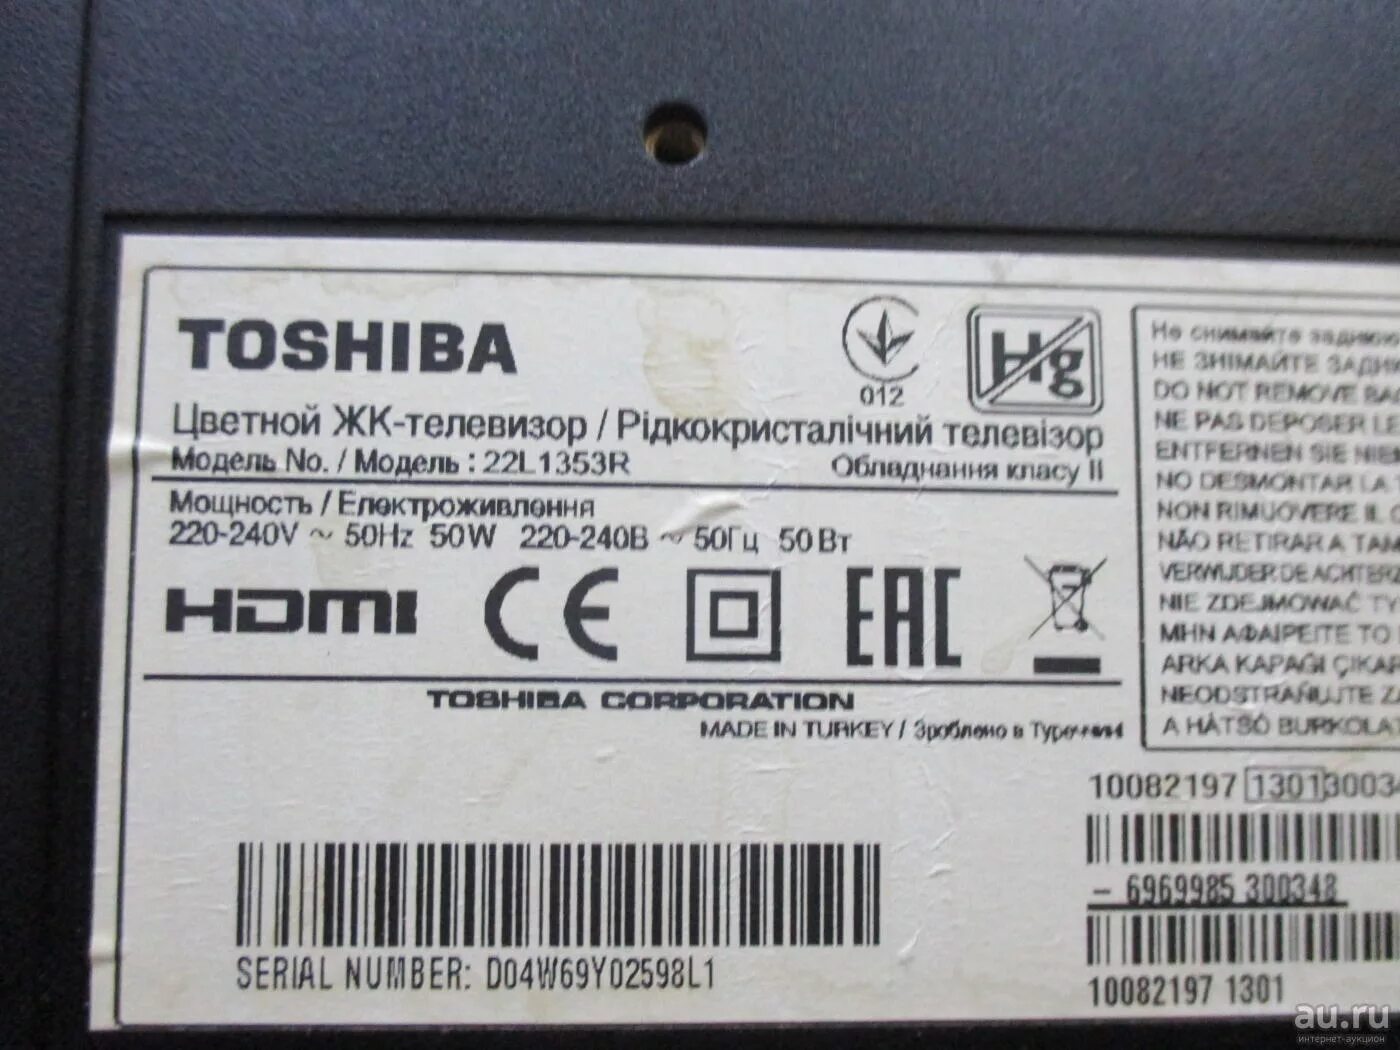 Телевизор тошиба что делать. Toshiba 22l1353. Toshiba 22l1353 led. Телевизор Toshiba модель no/ 22l1353l. Toshiba 22dv733r.